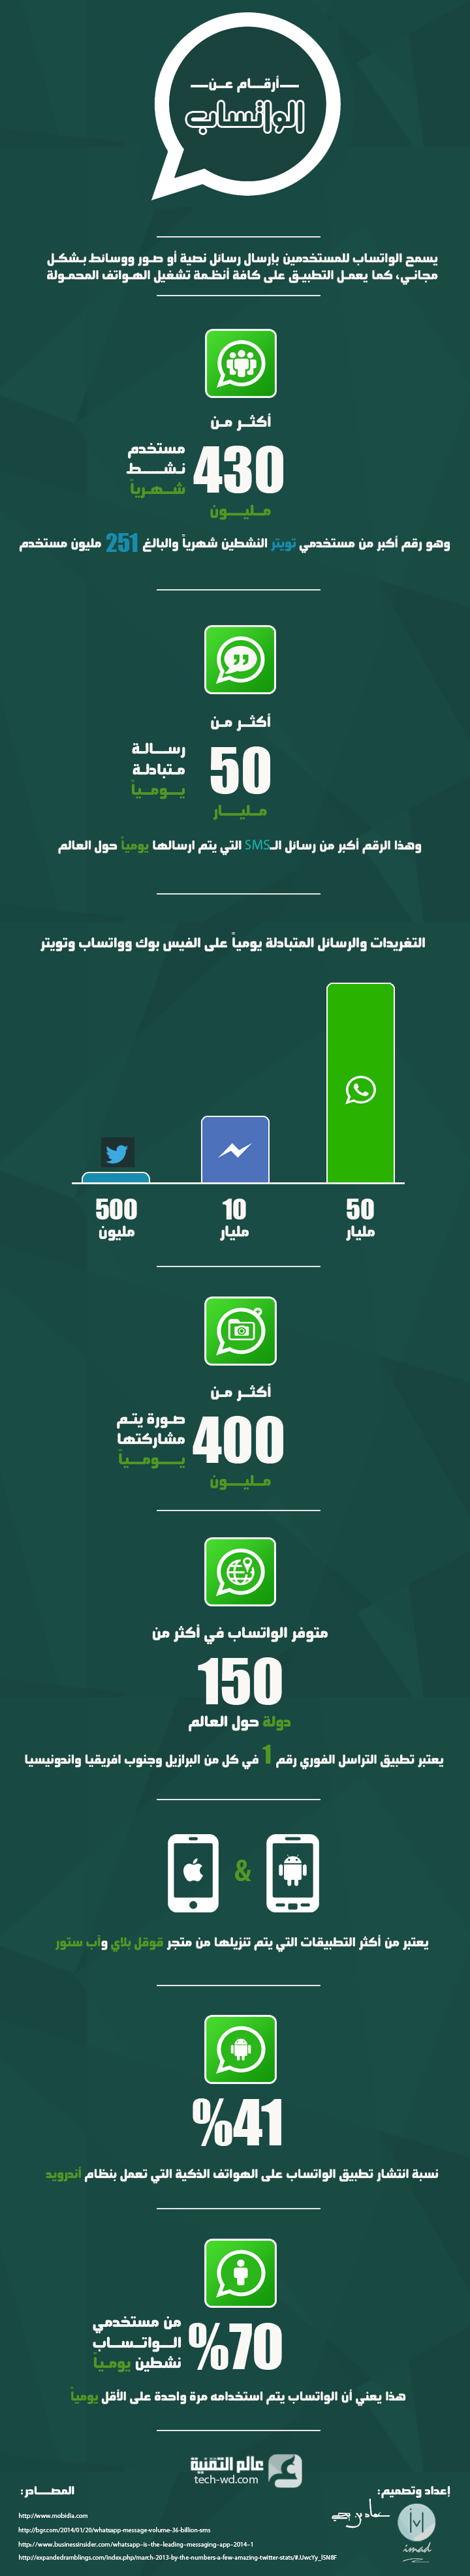 whats app infographic tech wd إنفوجرافيك: أرقام عن الواتساب